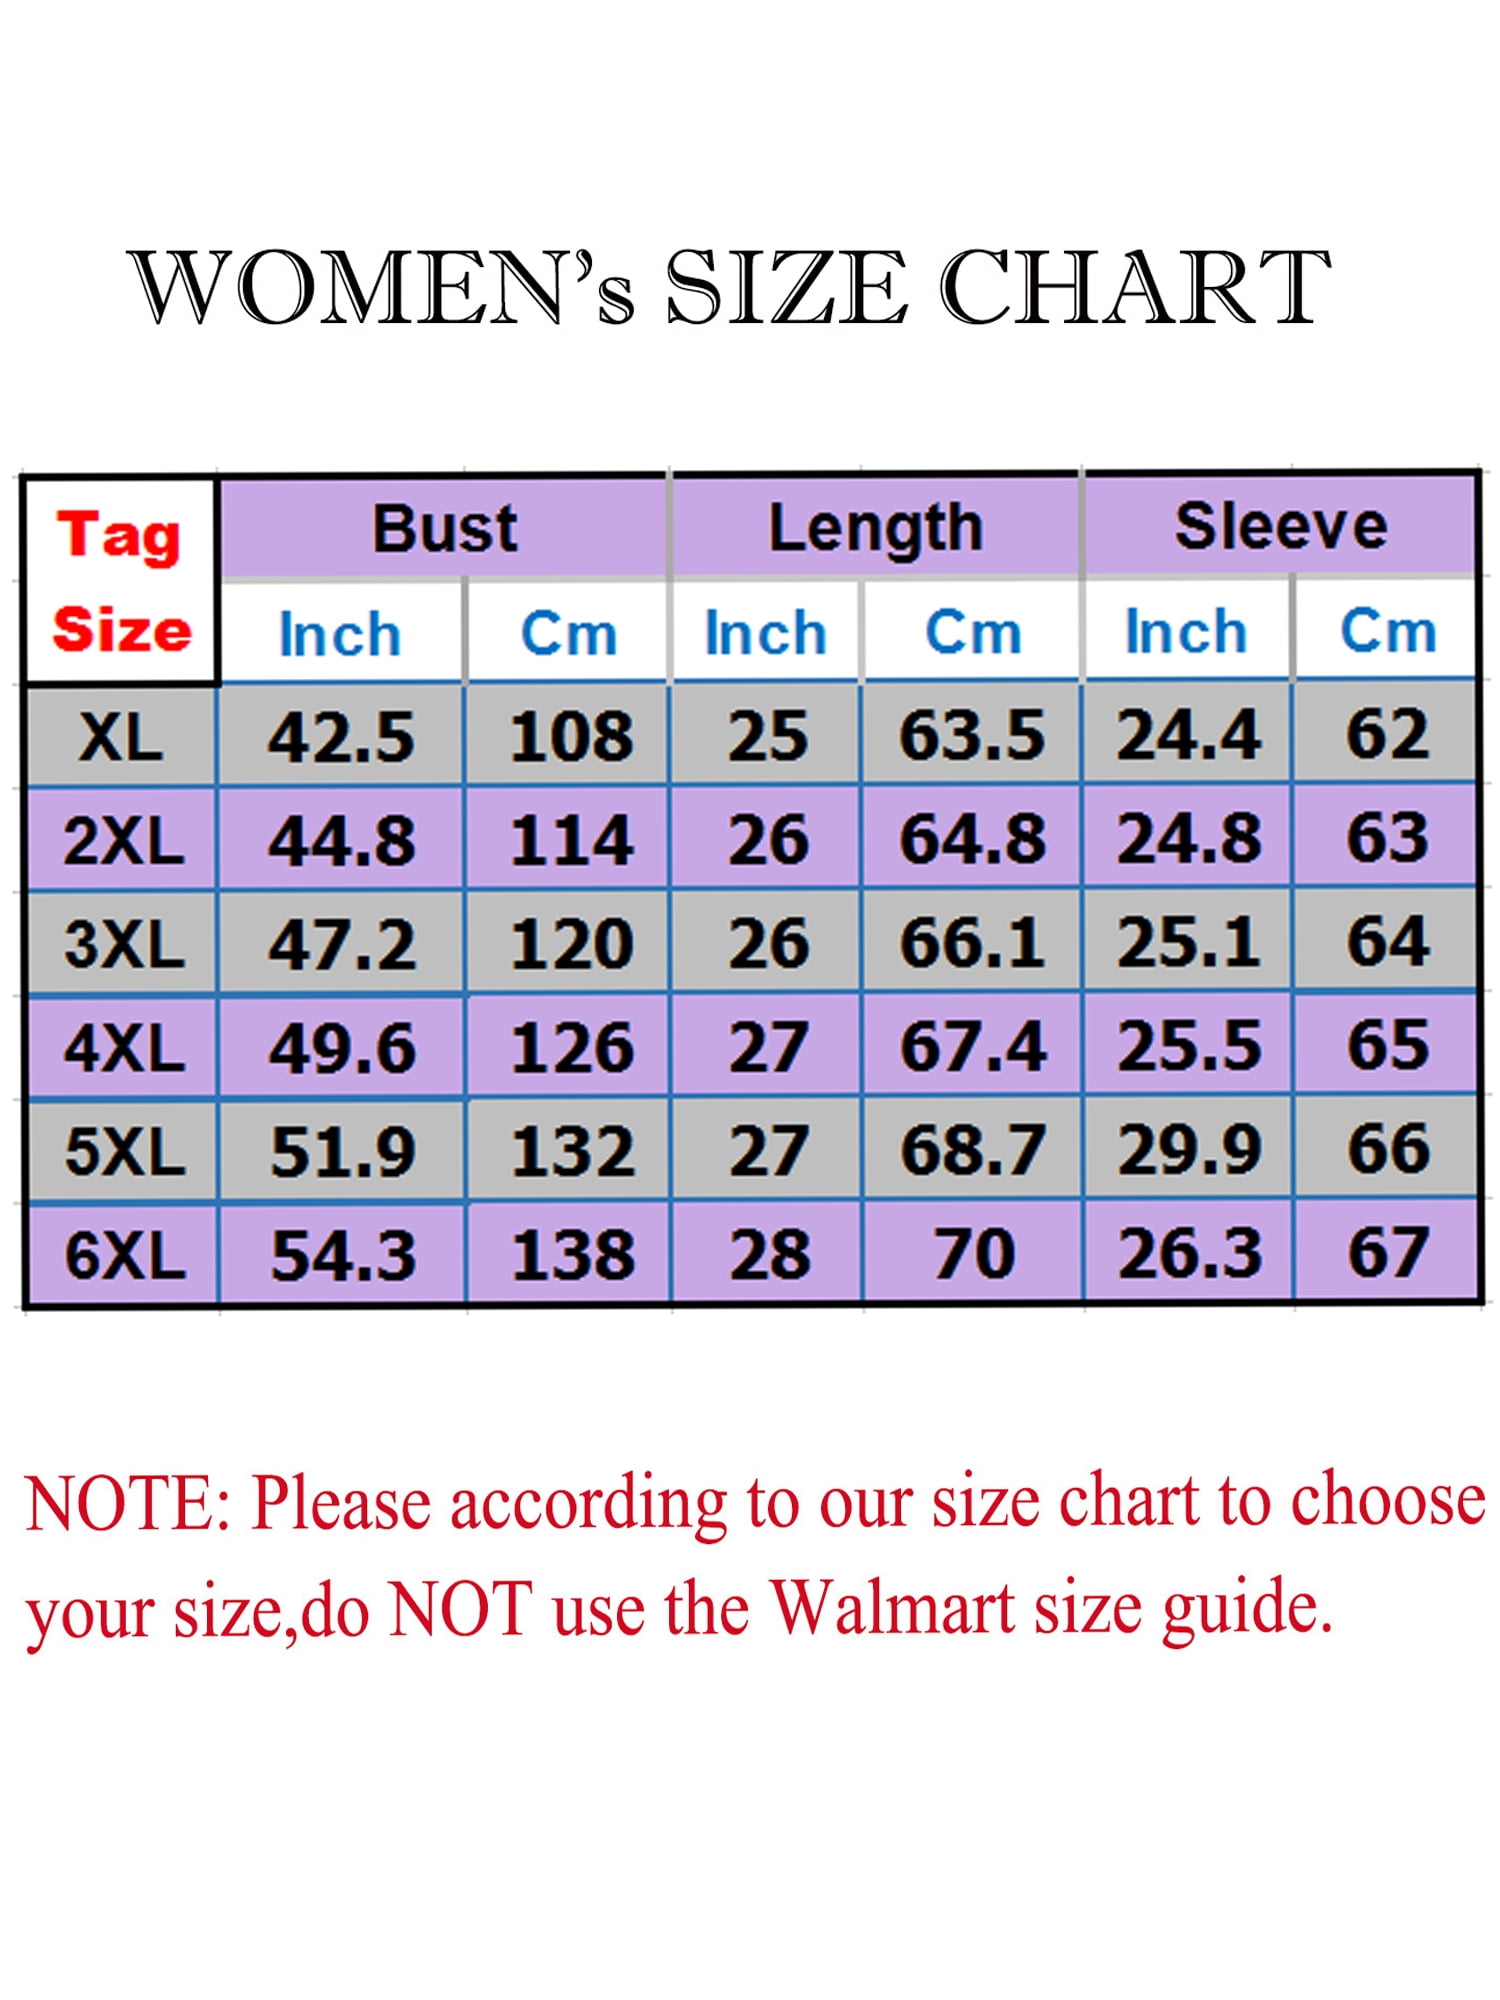 Walmart Women S Size Chart